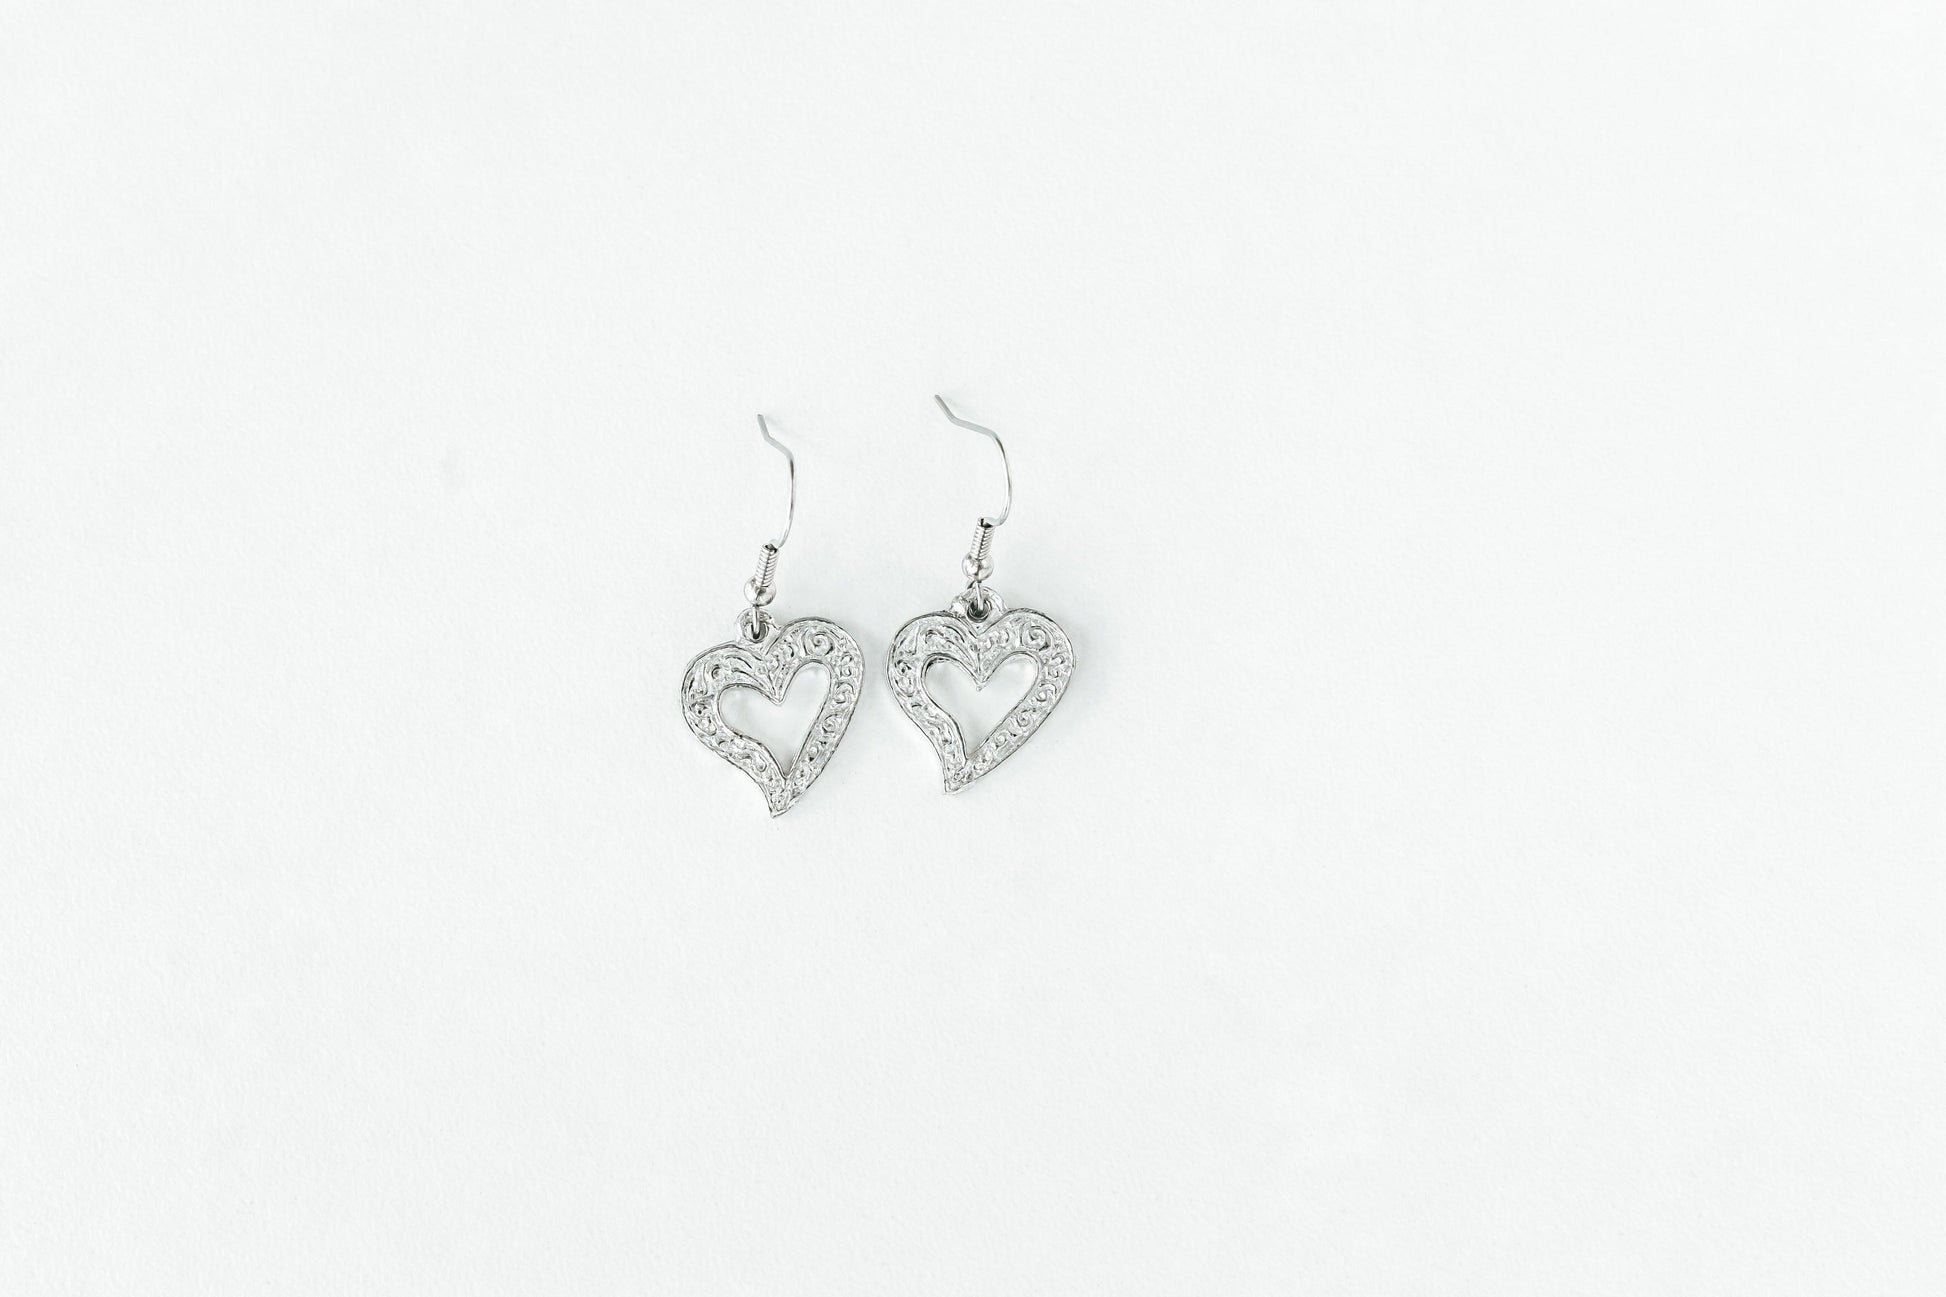 Handmade Pewter Earring Jewelry- Asymmetrical Heart - House of Morgan Pewter